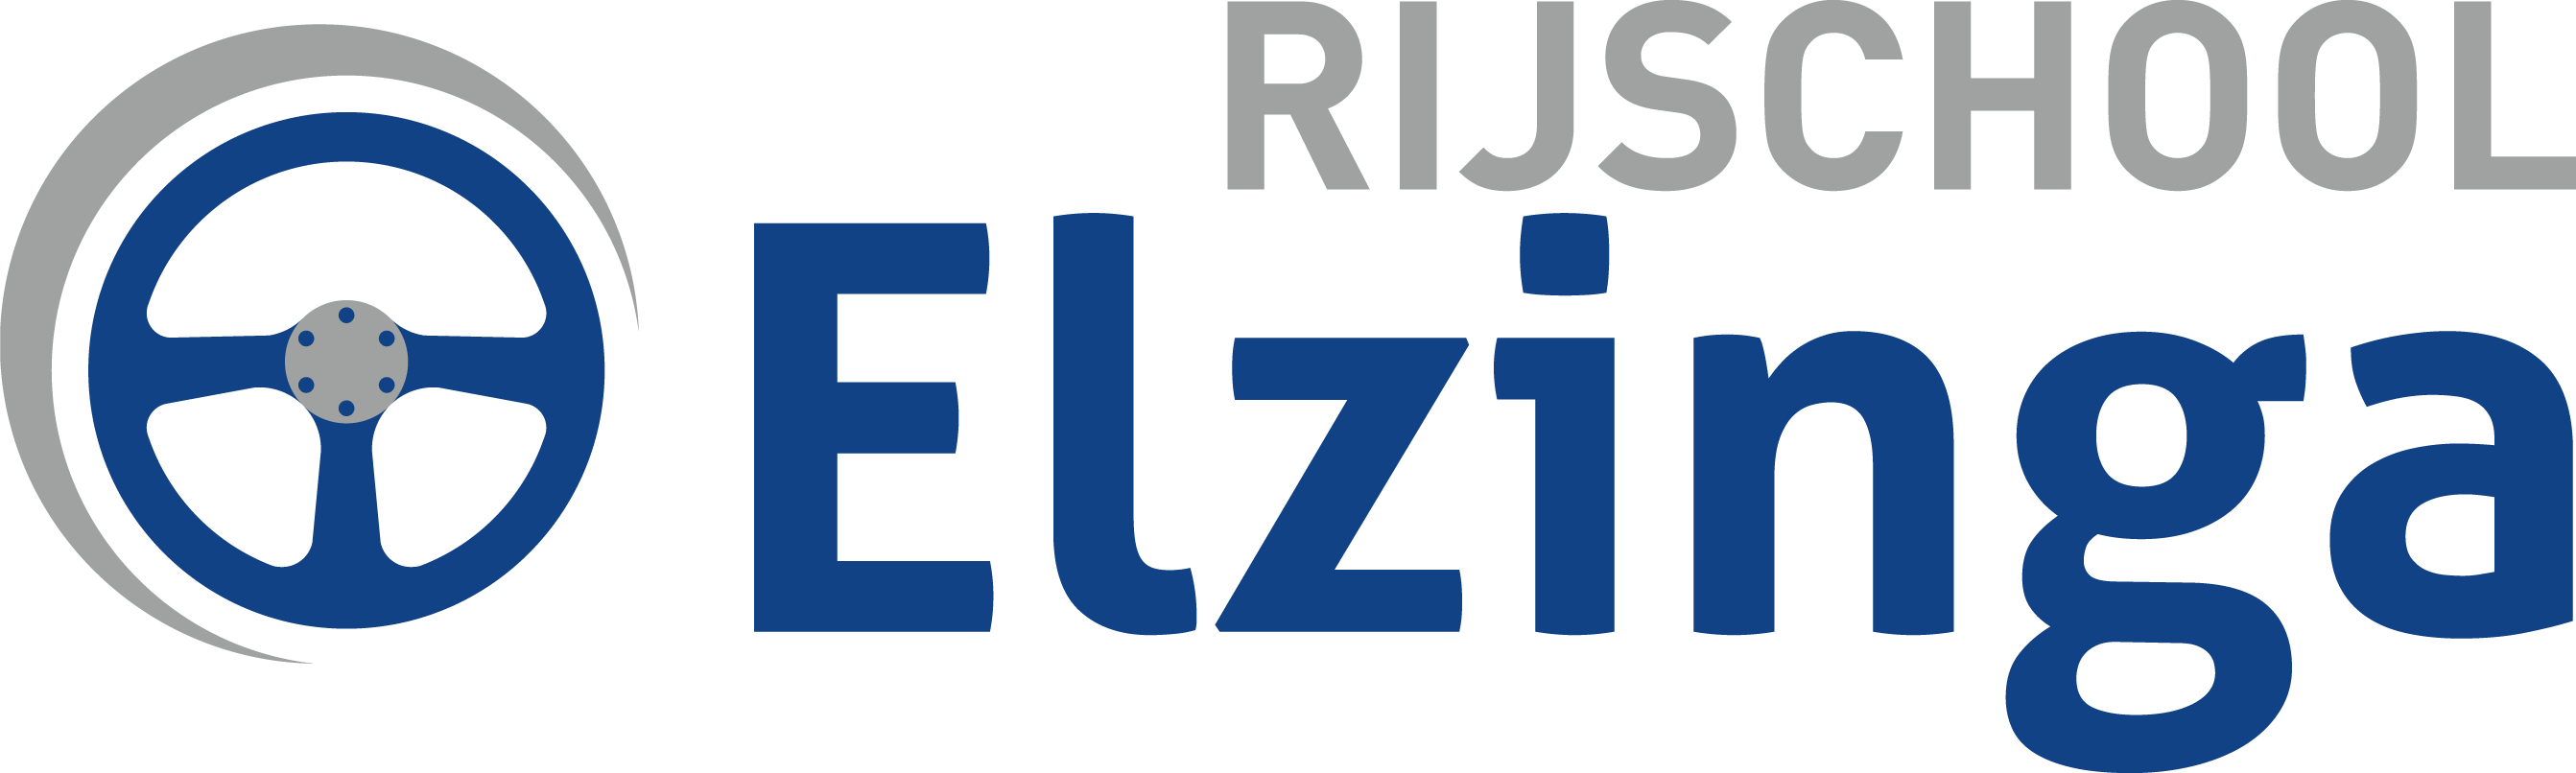 Logo Rijschool Elzinga